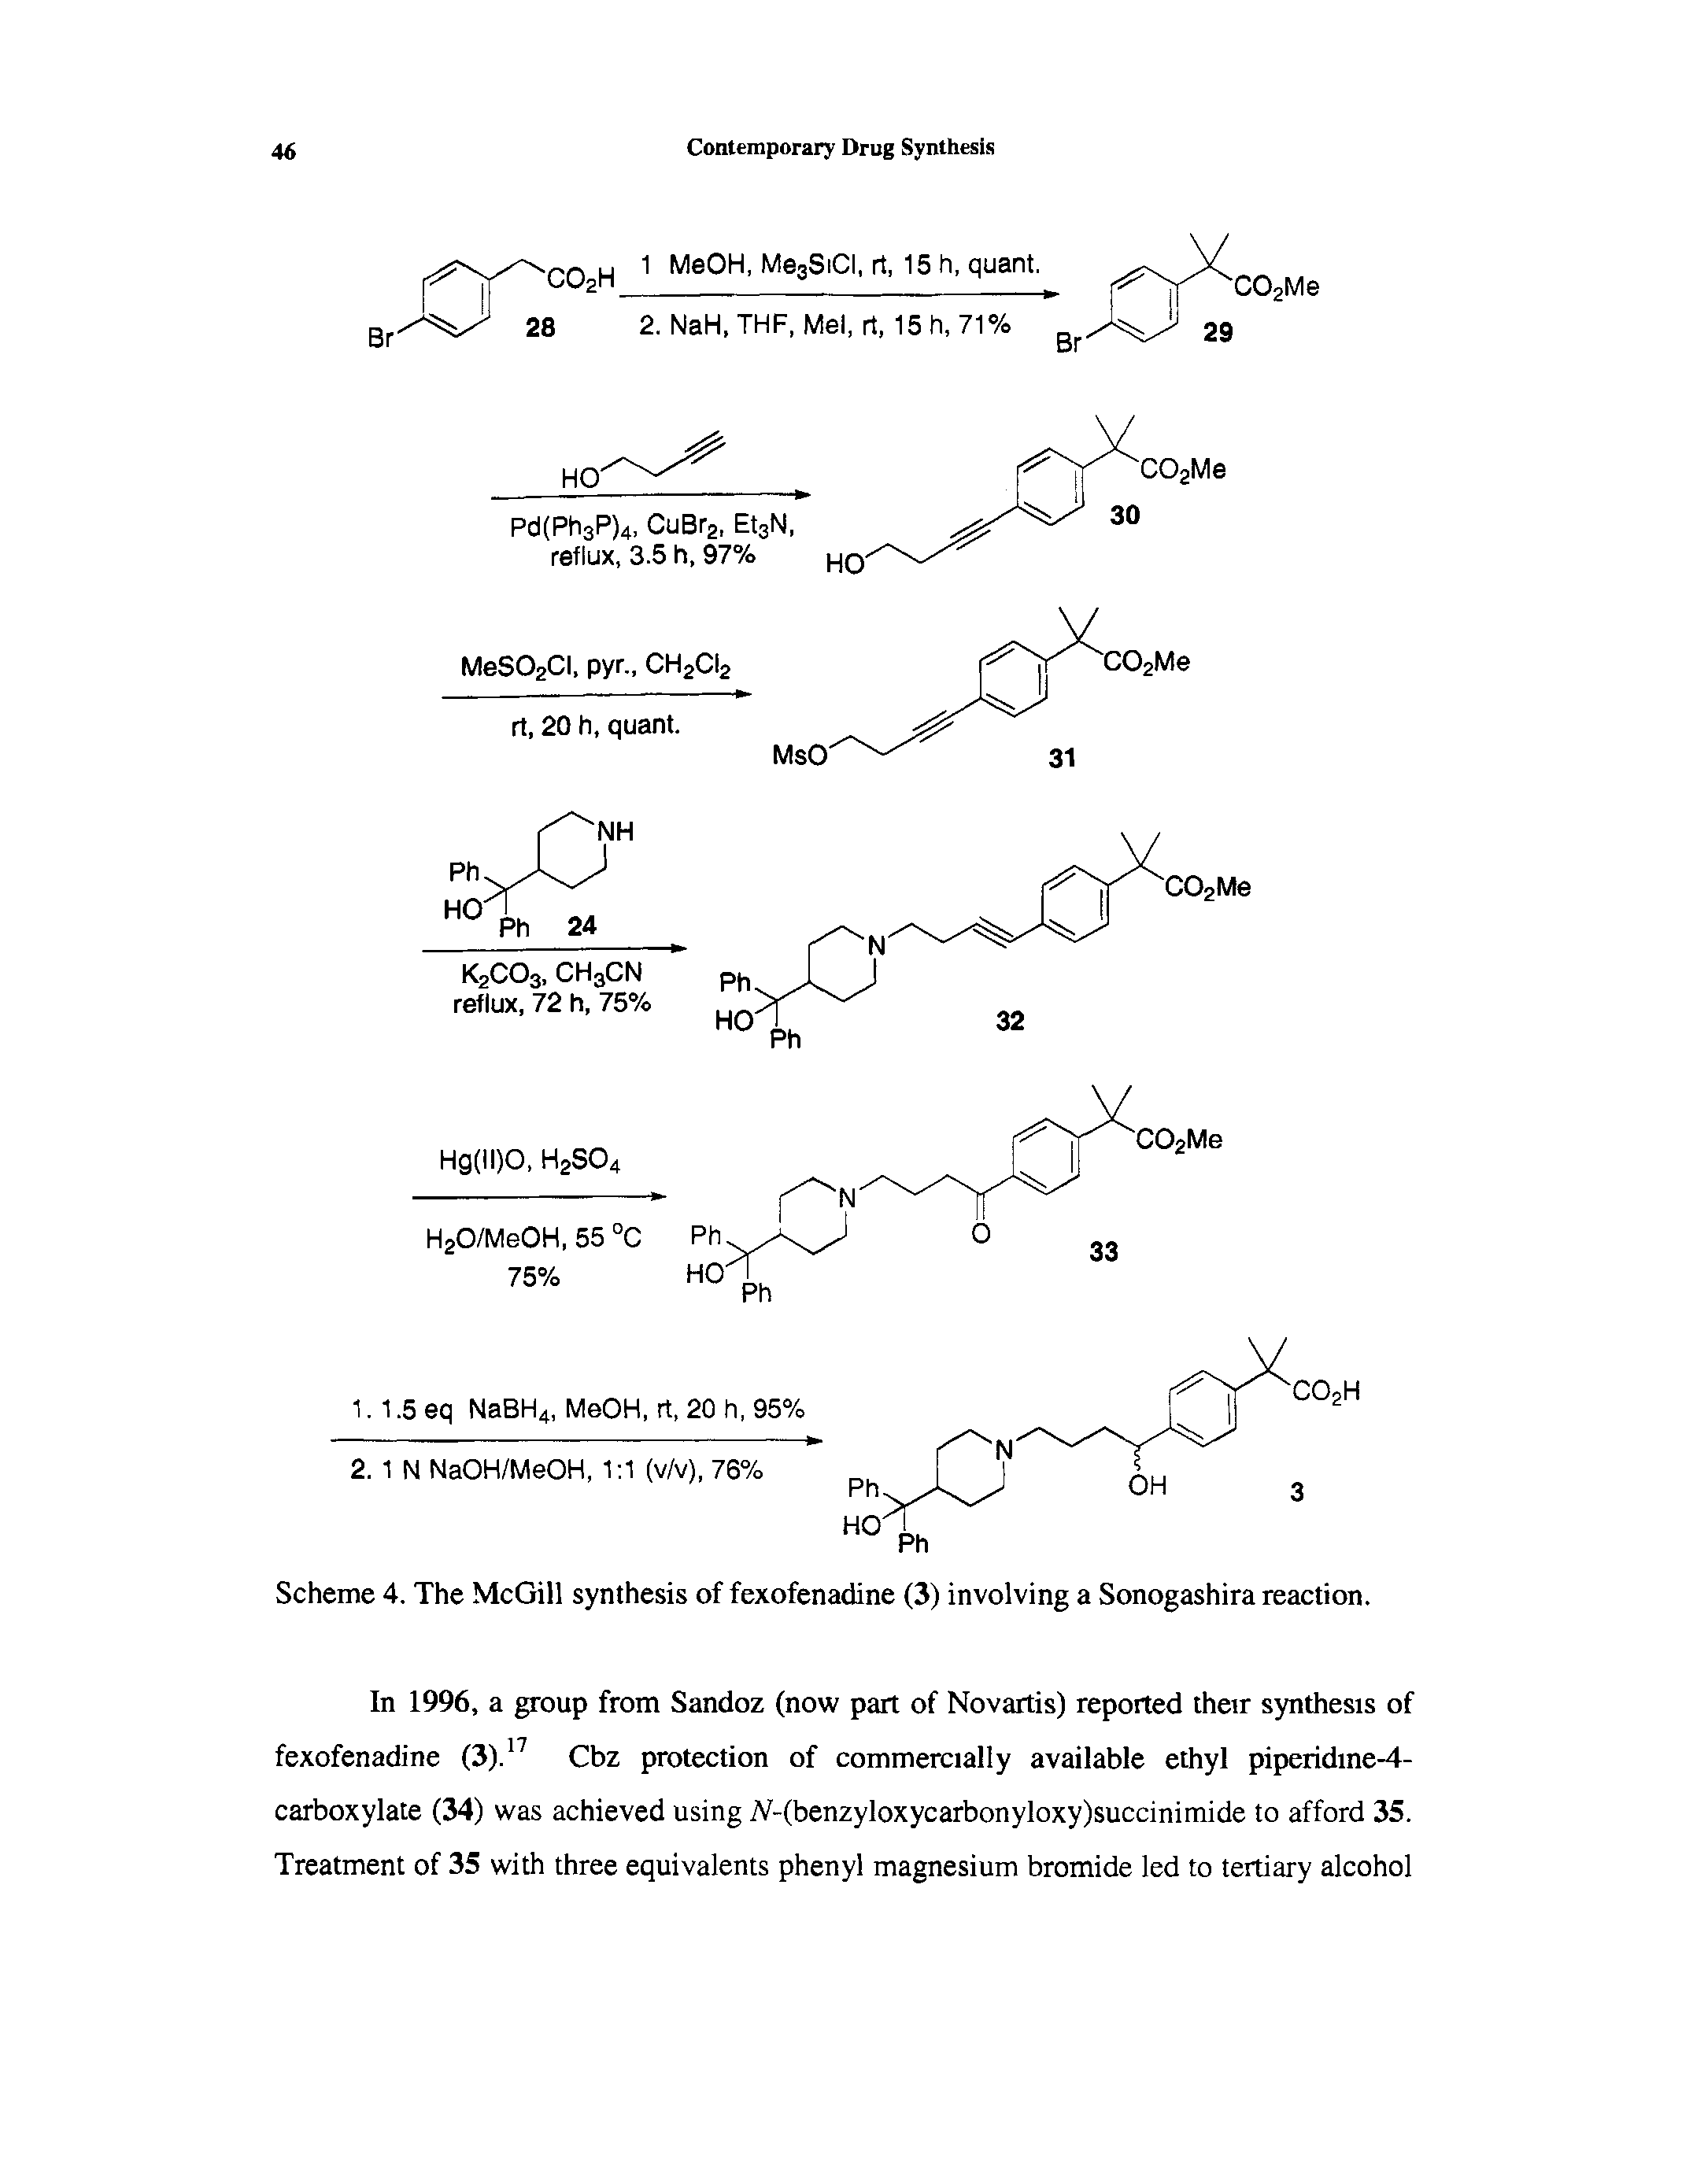 Scheme 4. The McGill synthesis of fexofenadine (3) involving a Sonogashira reaction.